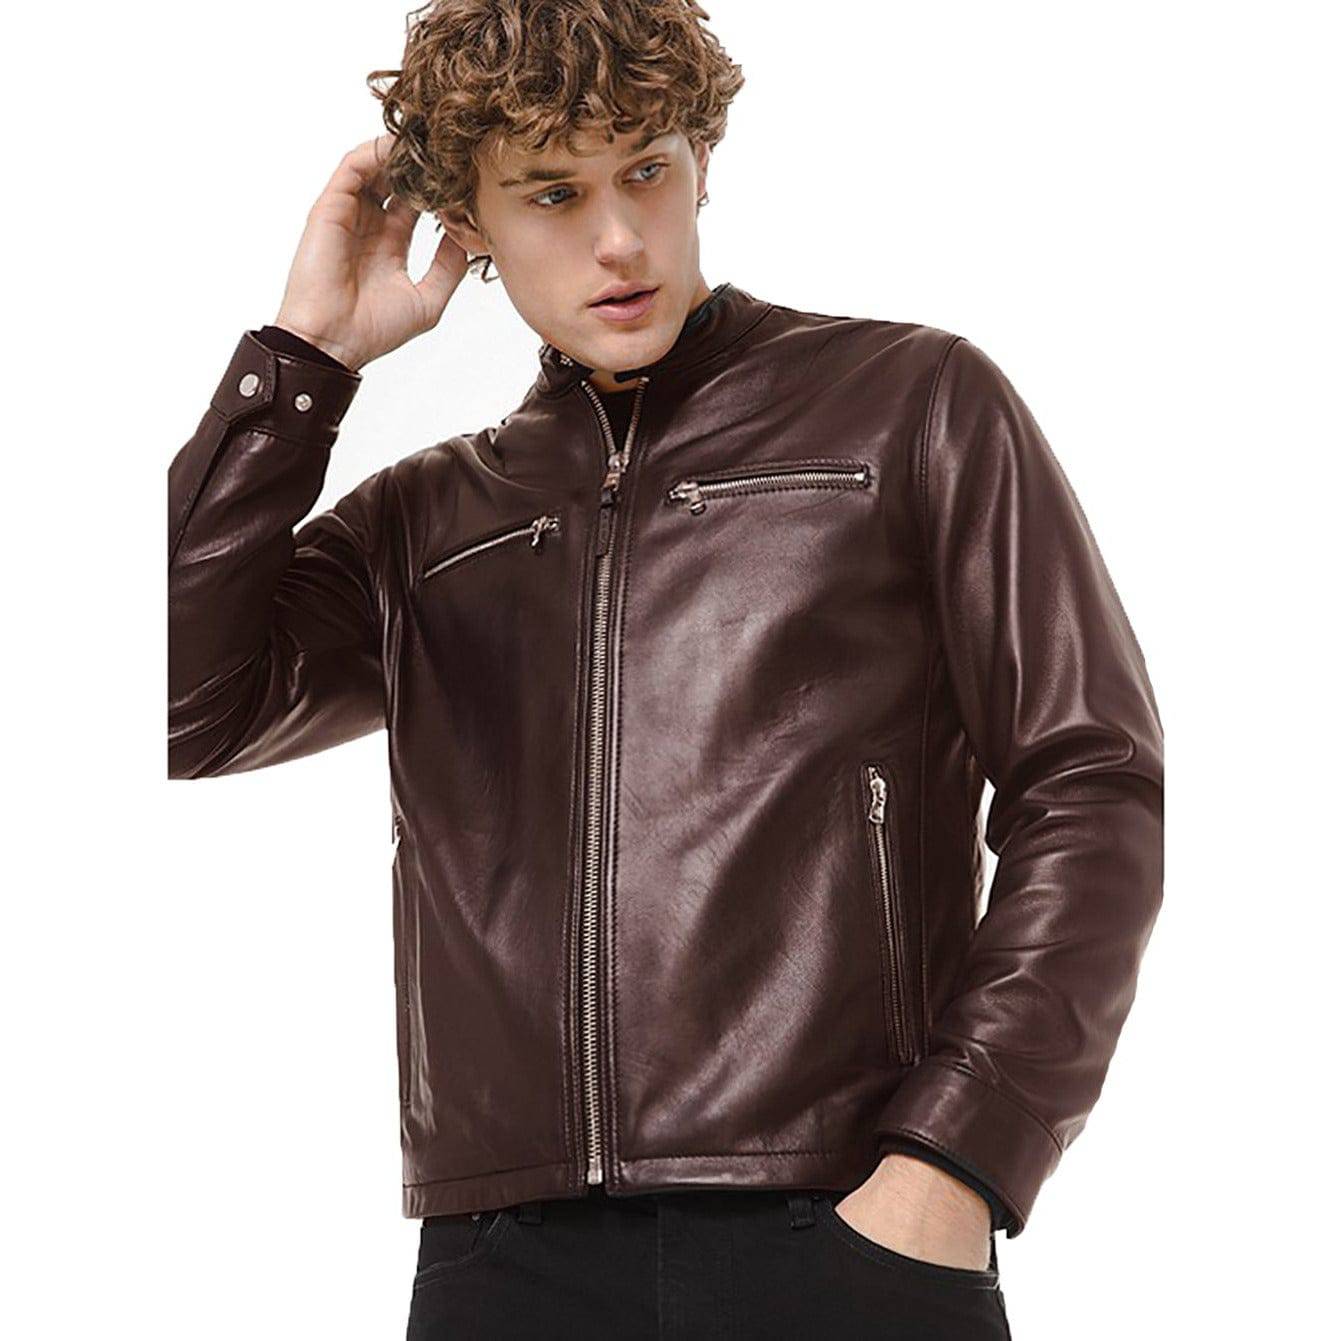 Michael Kors Mens's Moto Leather Jacket - Zooloo Leather